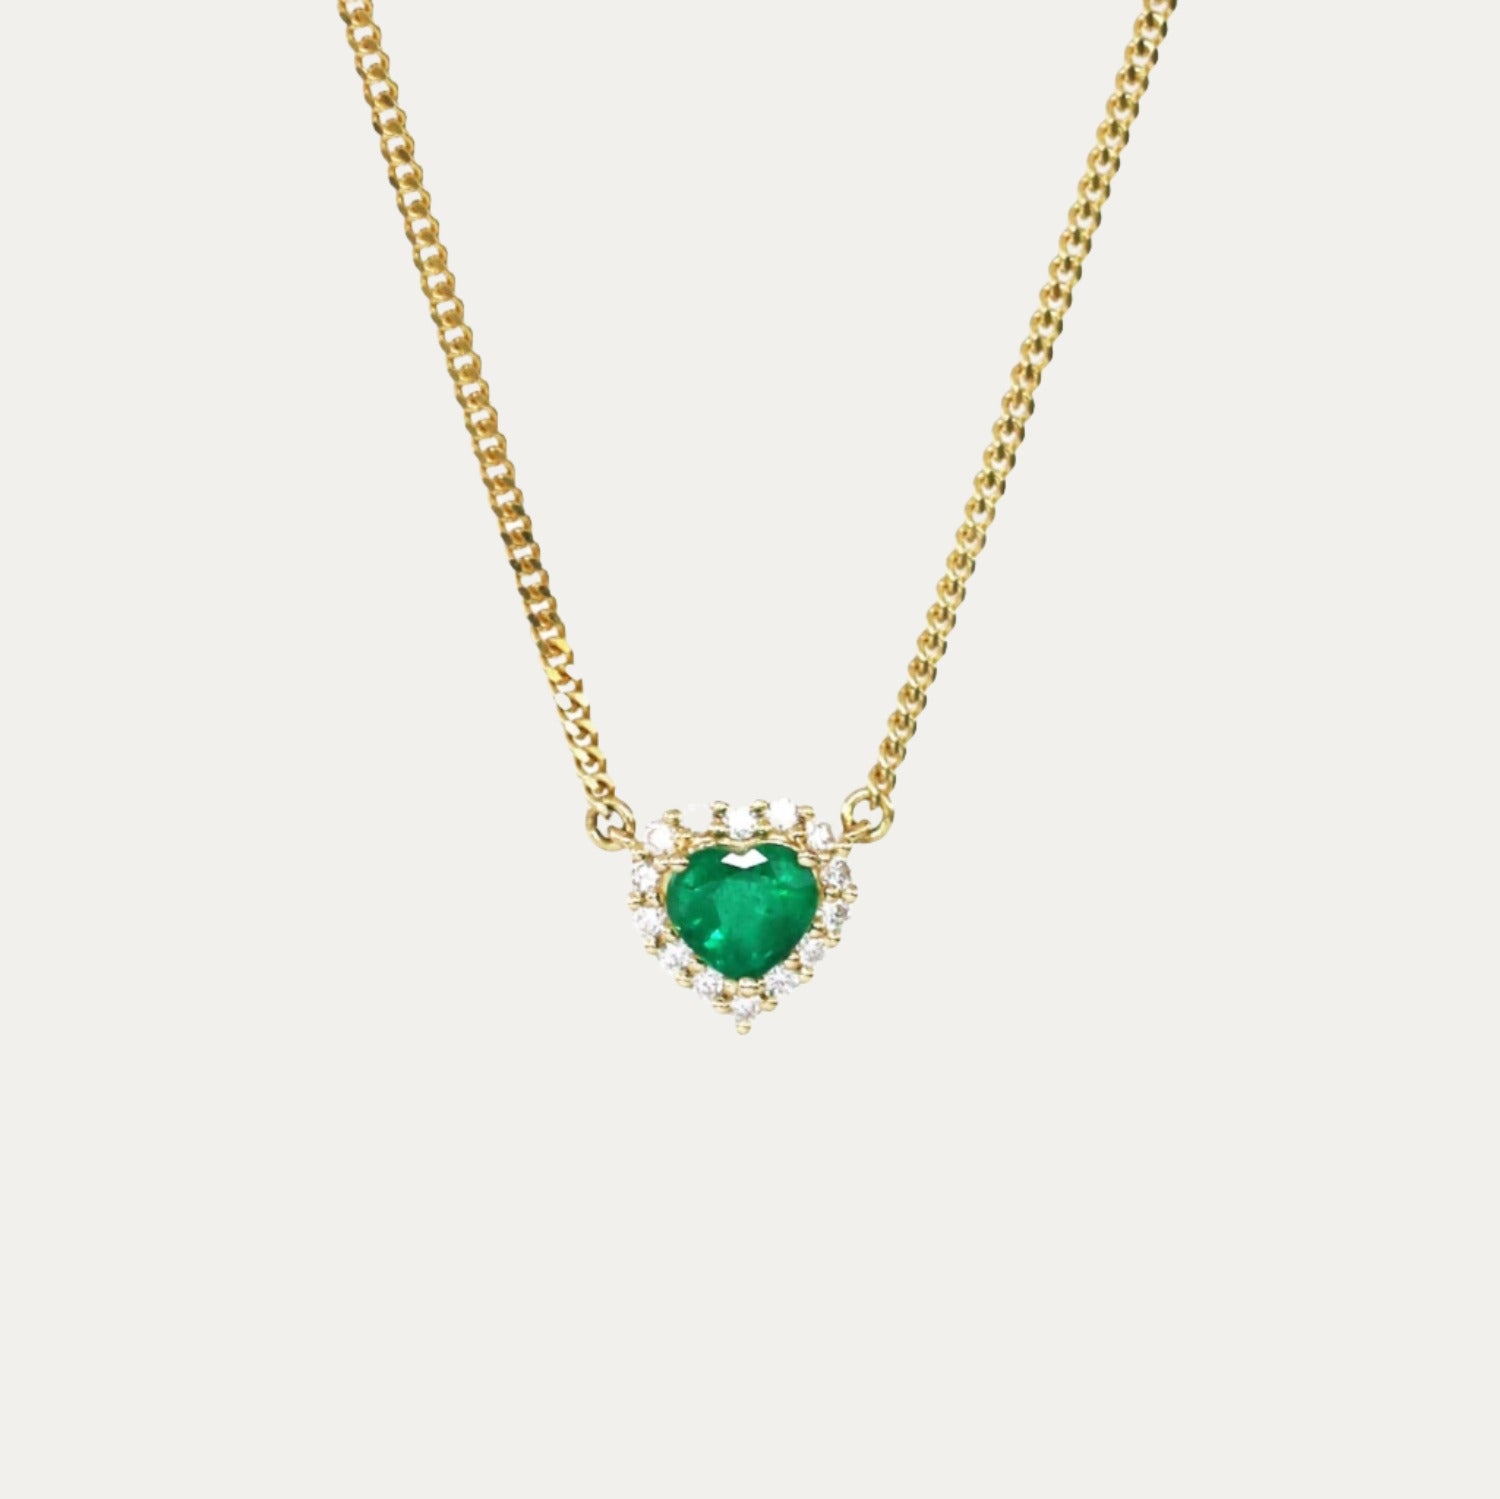  18k黃金心形綠寶石鑽石頸鍊 18k Yellow Gold Heart-shaped Emerald Diamond Halo Cuban Chain Necklace